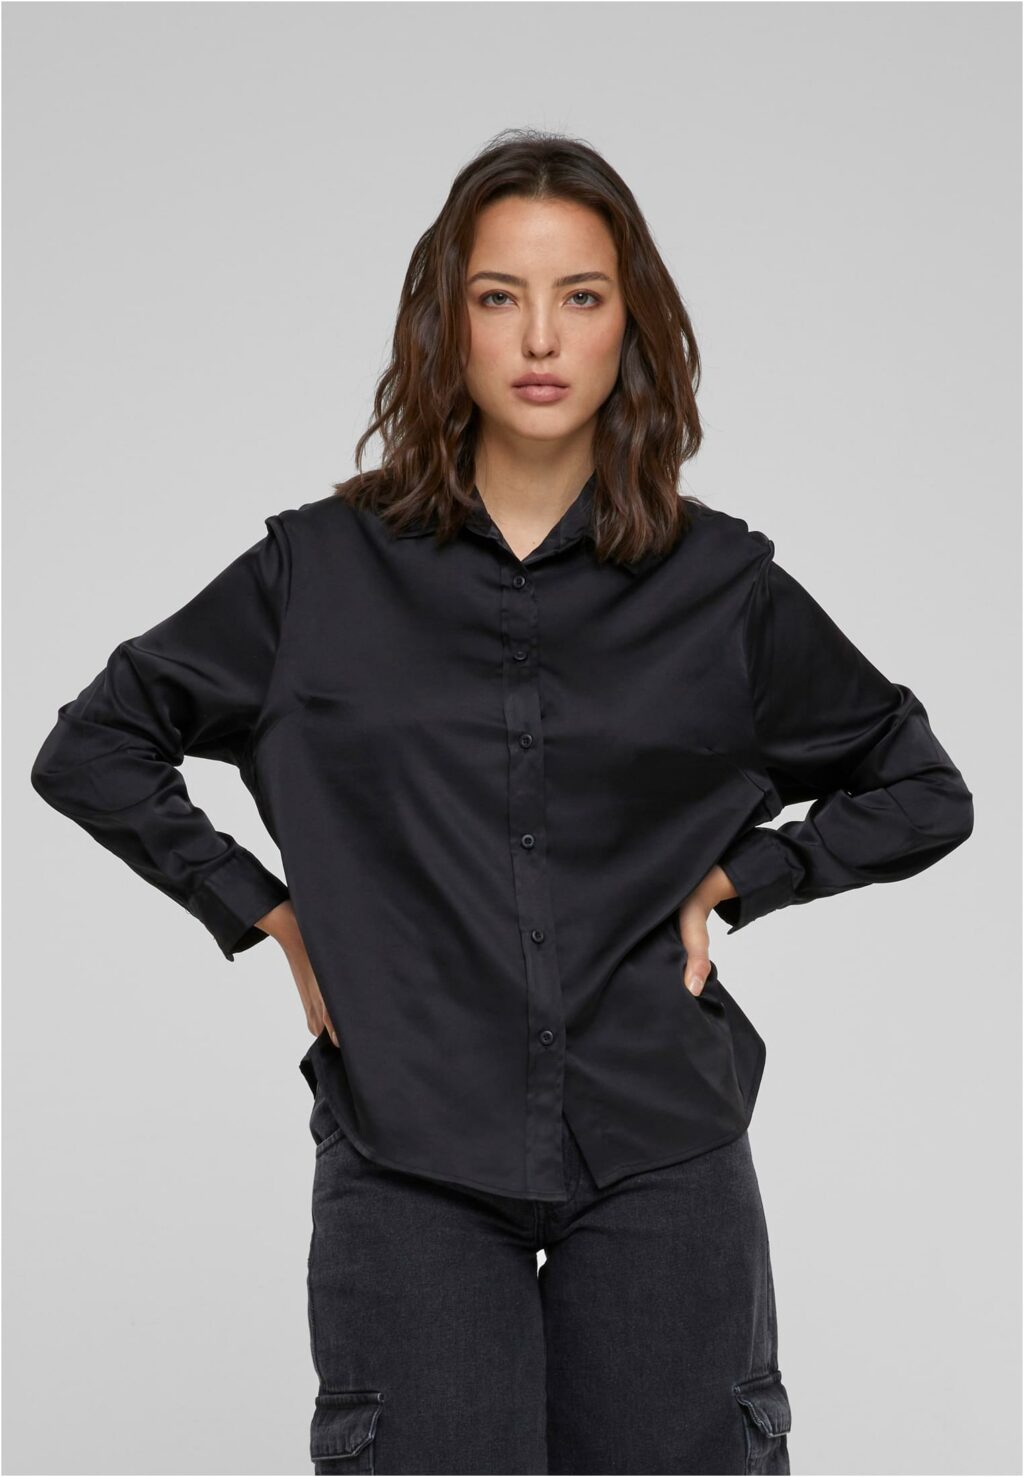 Urban Classics Ladies Satin Shirt black TB6127